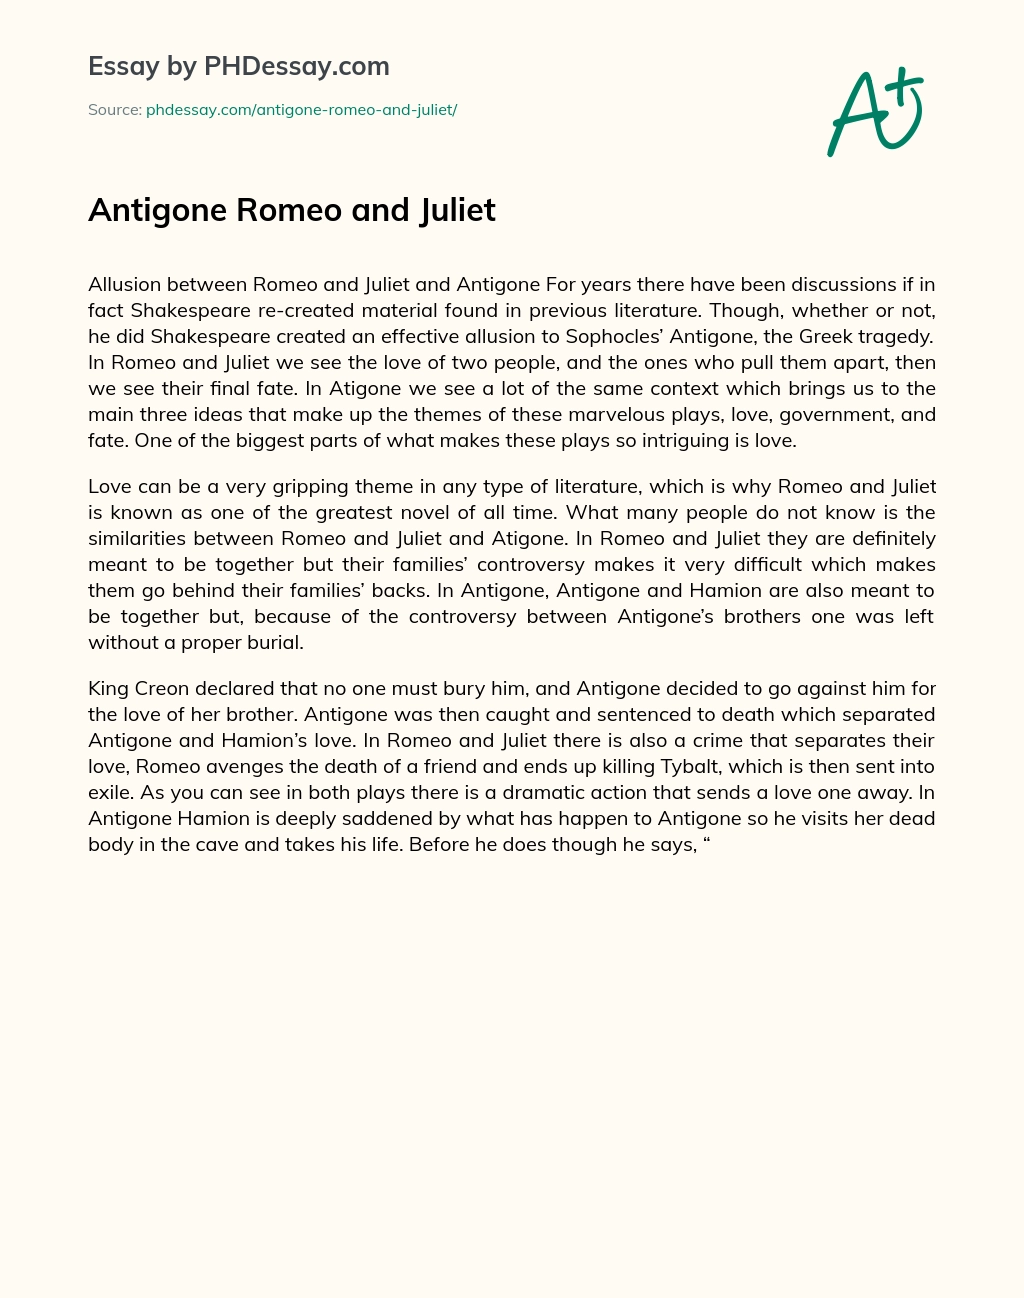 Antigone Romeo and Juliet essay